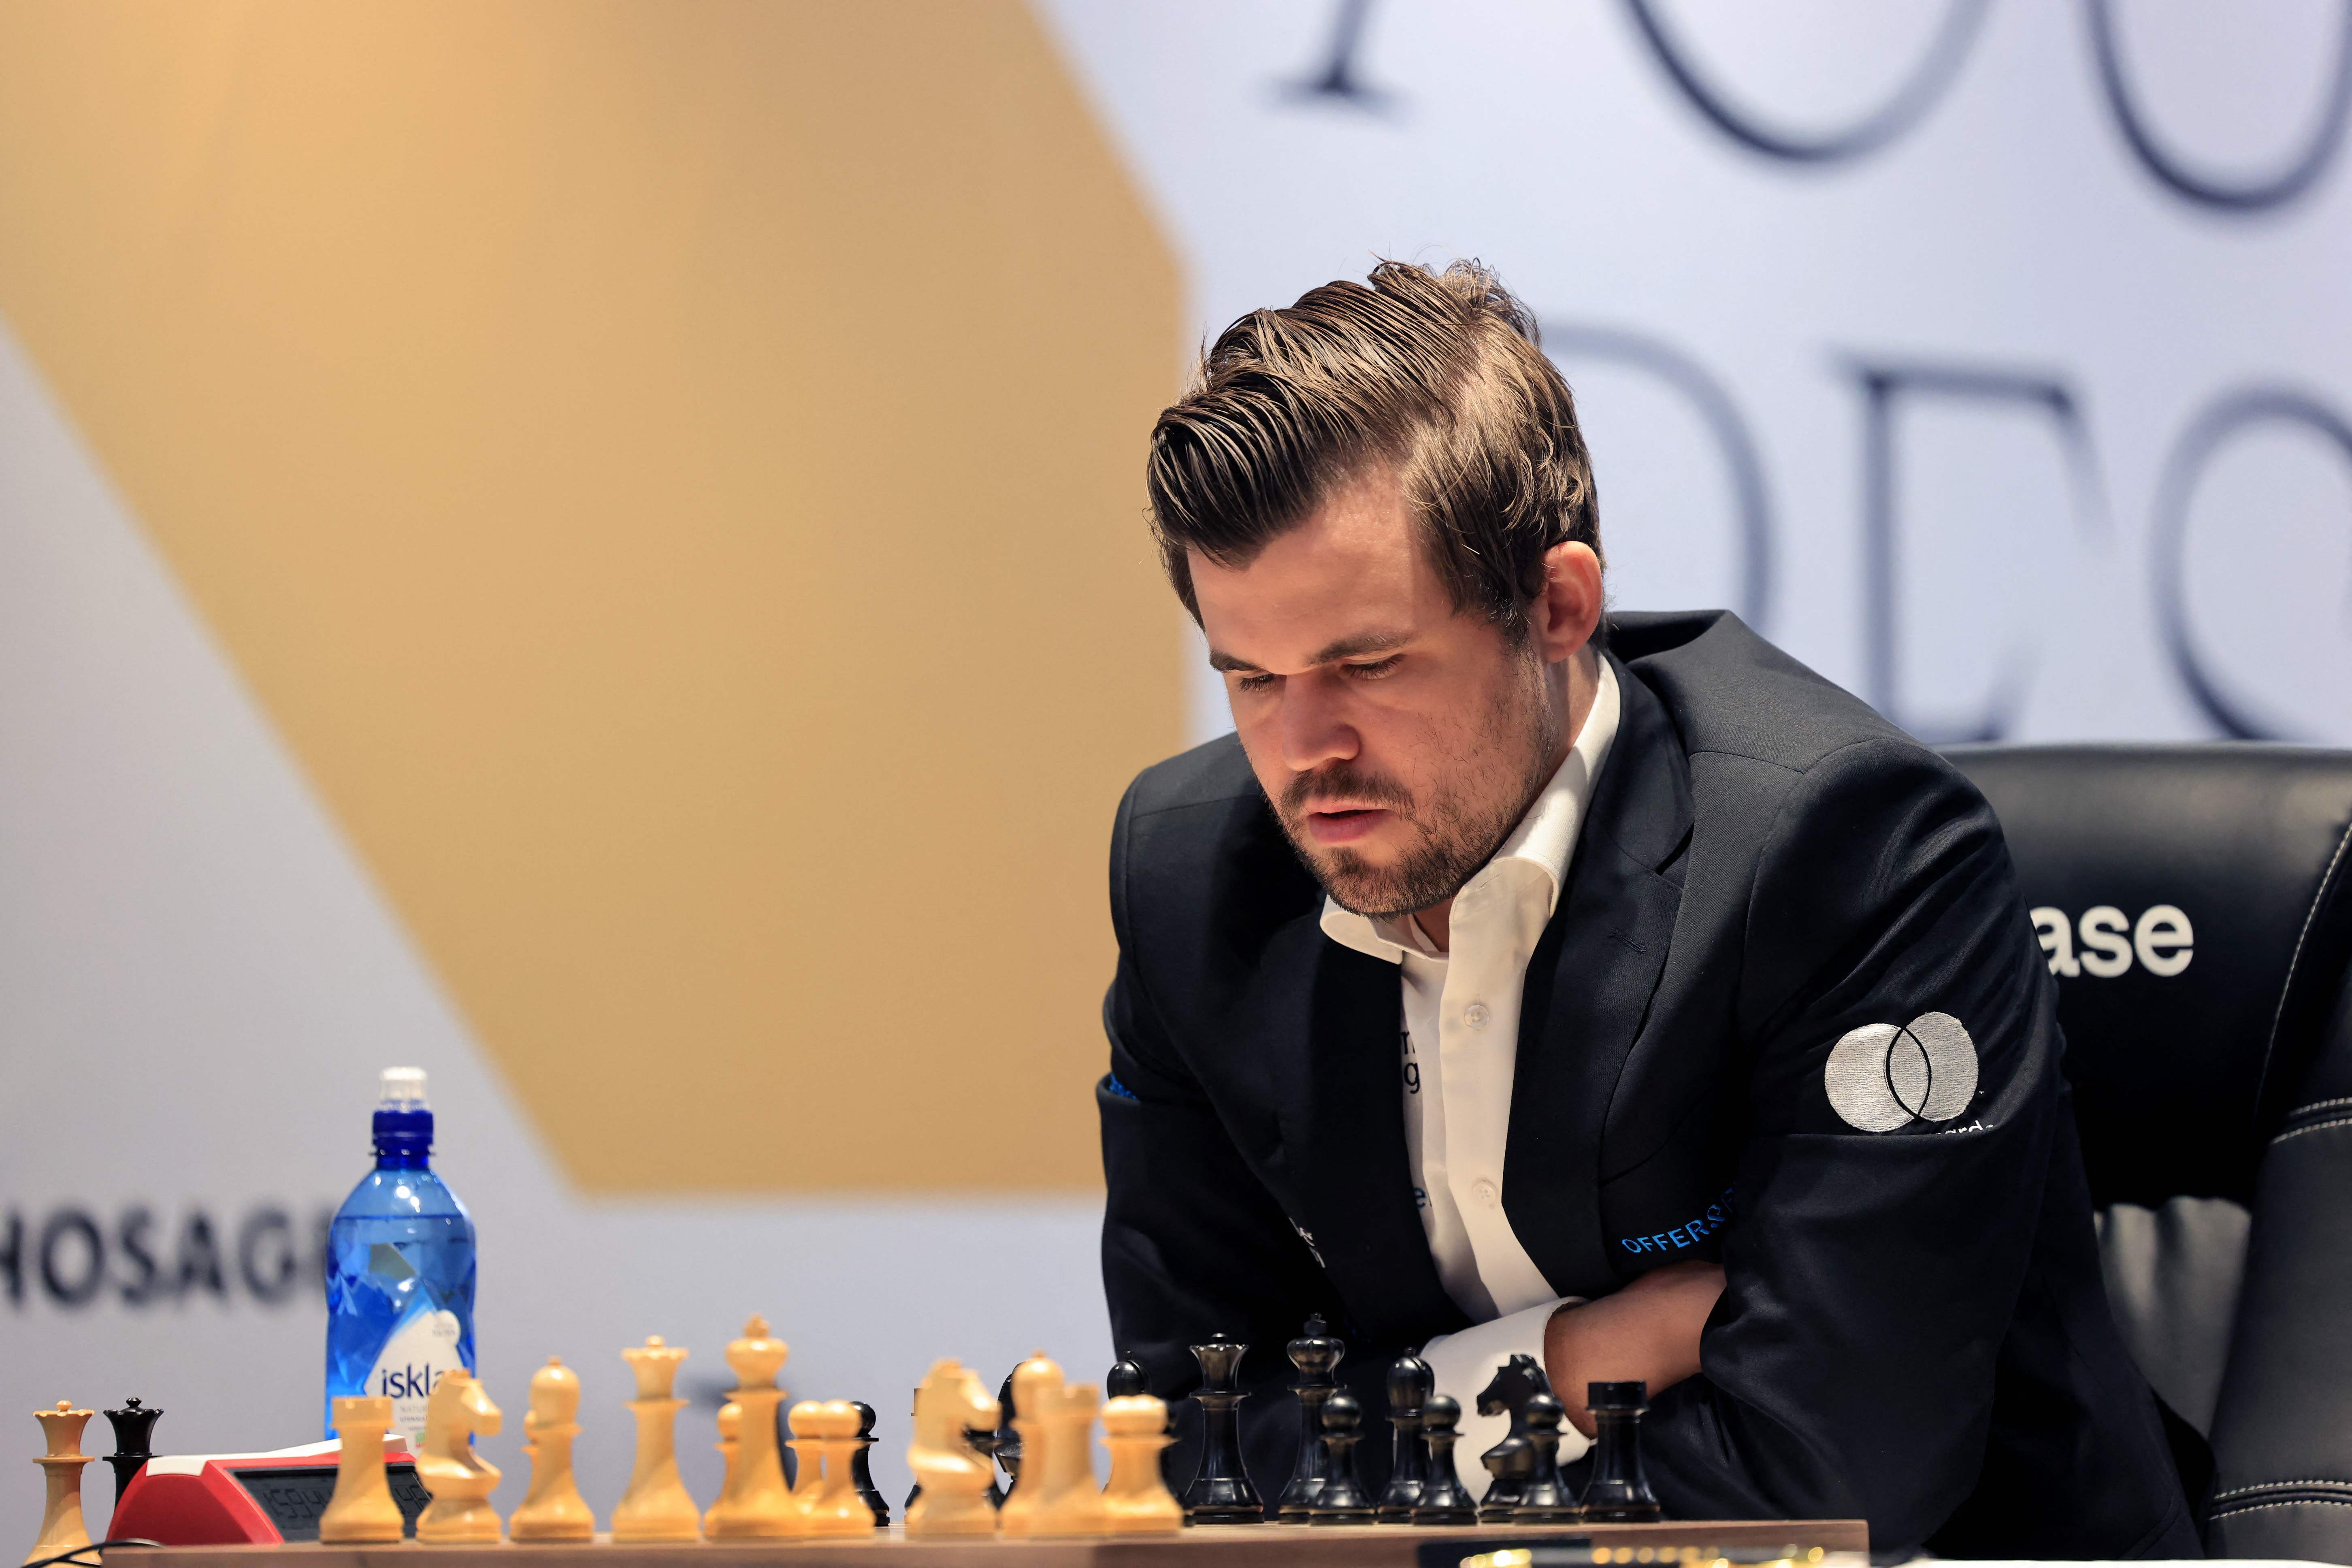 Chess: Magnus Carlsen wins as Alireza Firouzja blunders in pawn